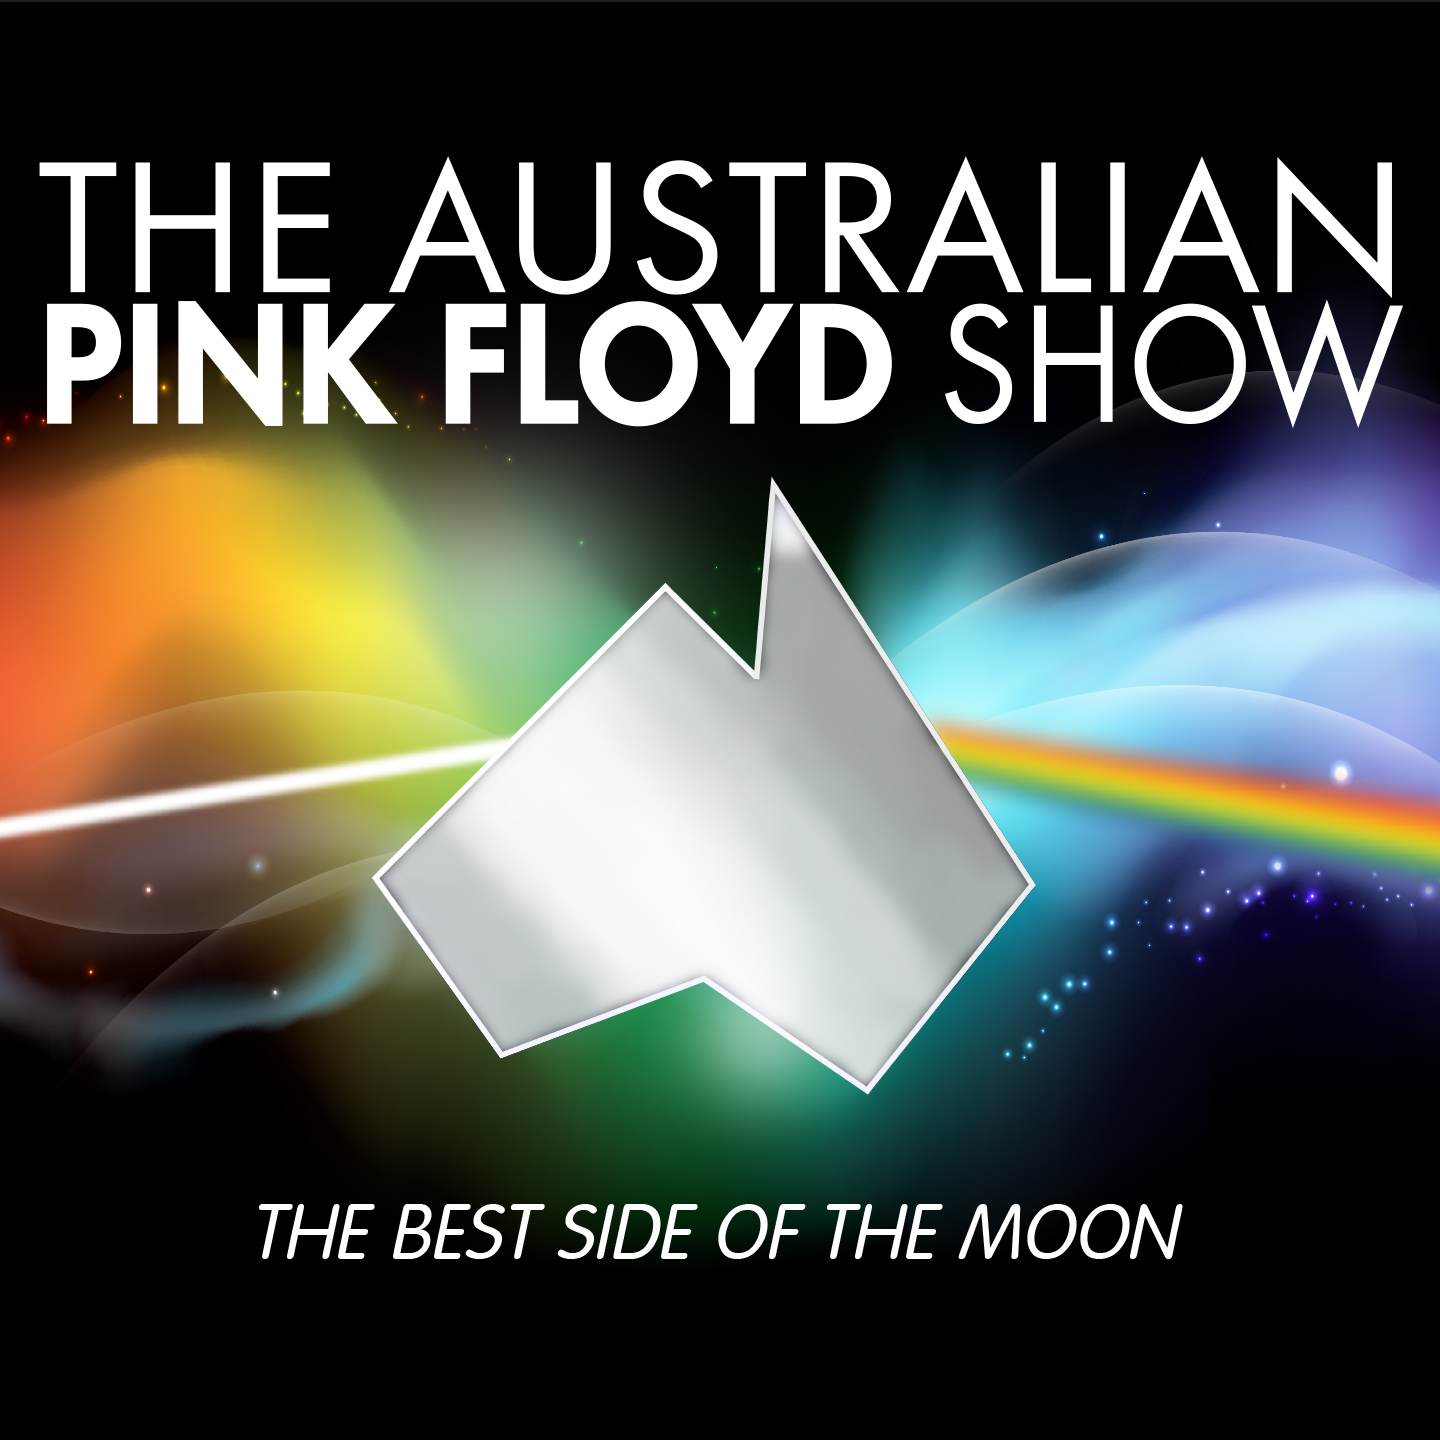 The Australian Pink Floyd Show @ Salle Wilfrid-Pelletier (Montréal)